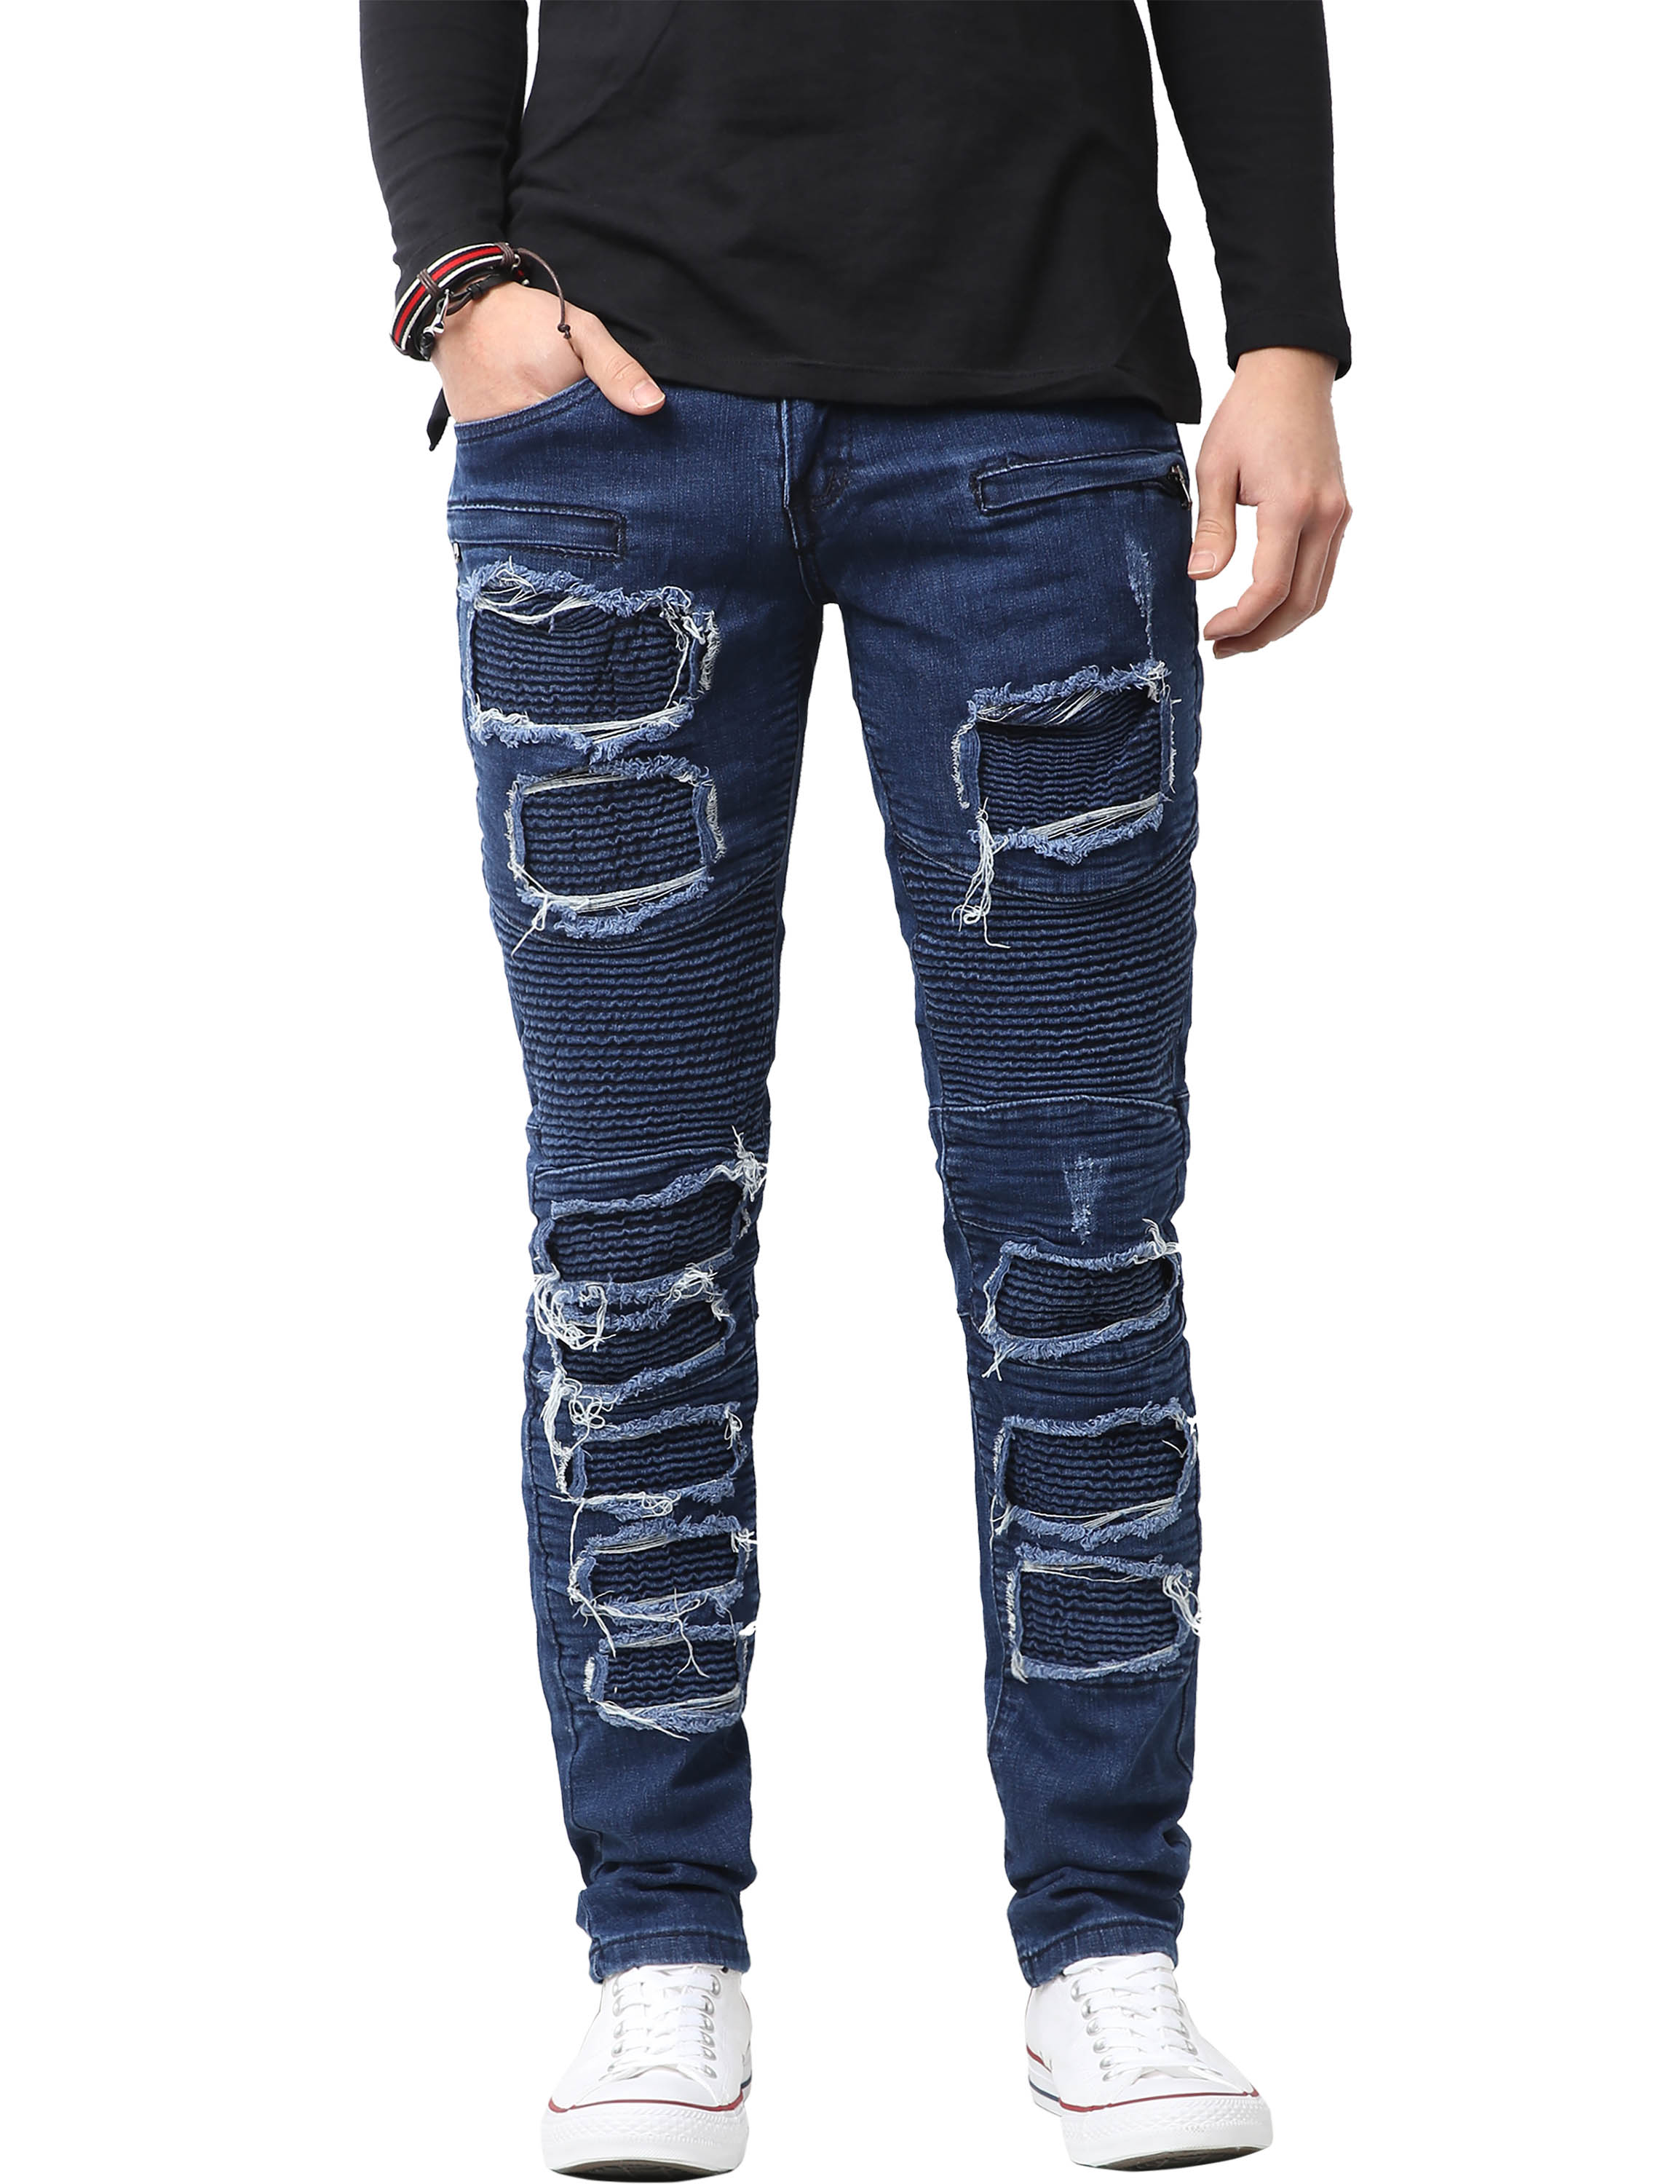 Ma Croix Mens Biker Jeans Distressed Ripped Zipper Straight Slim Fit Stretch Denim Pants - image 2 of 5